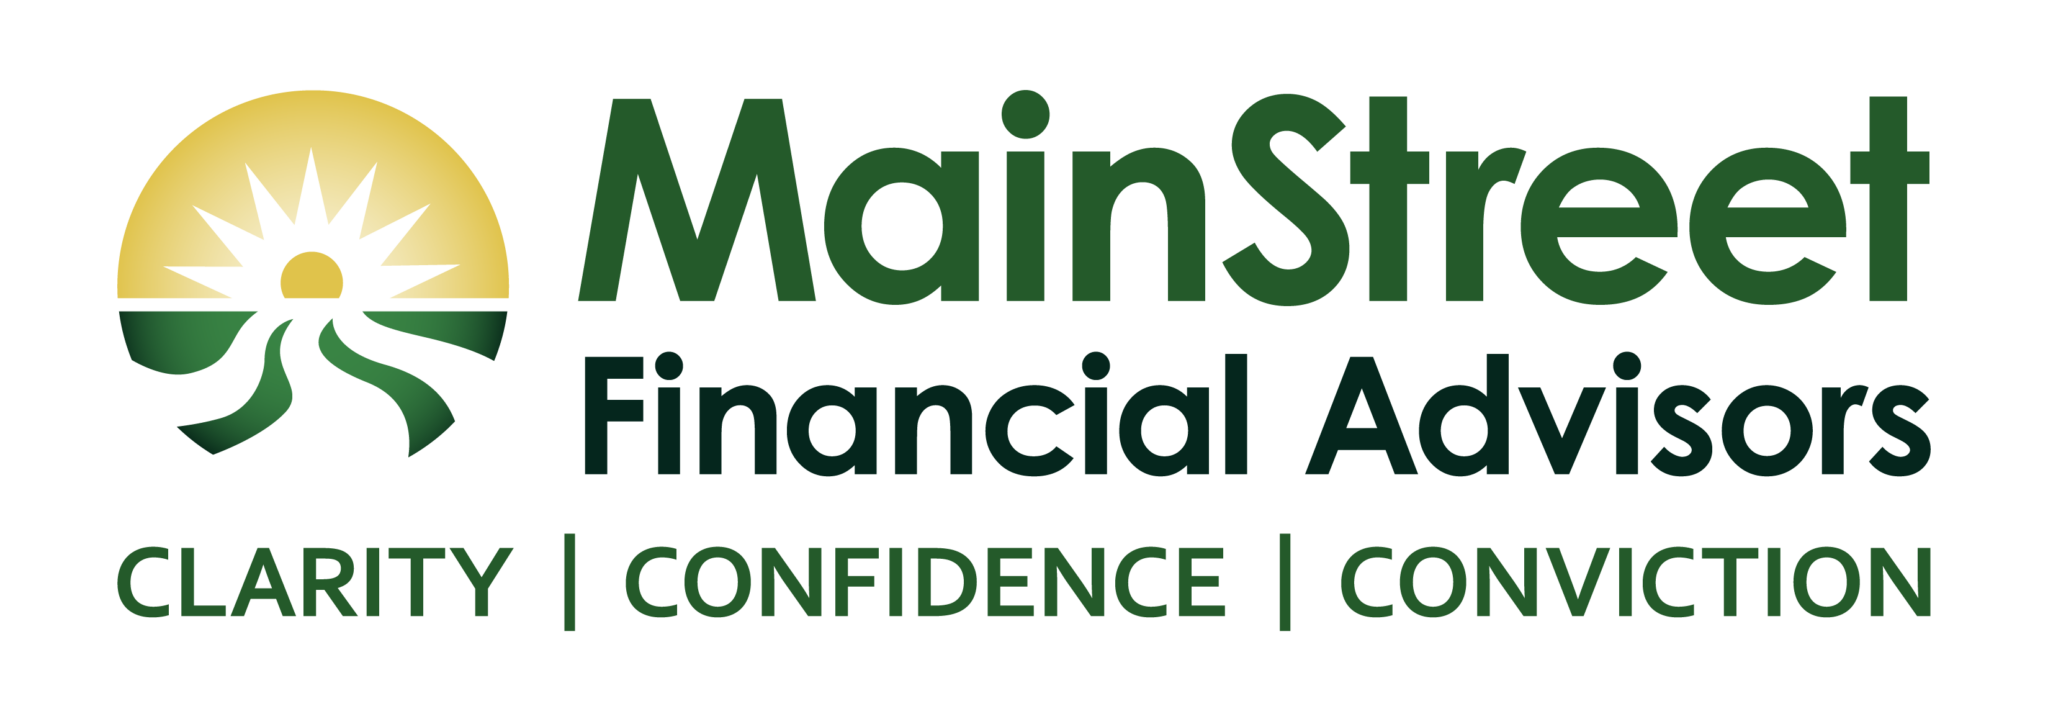 Personal Financial Management - MainStreet Financial Advisors